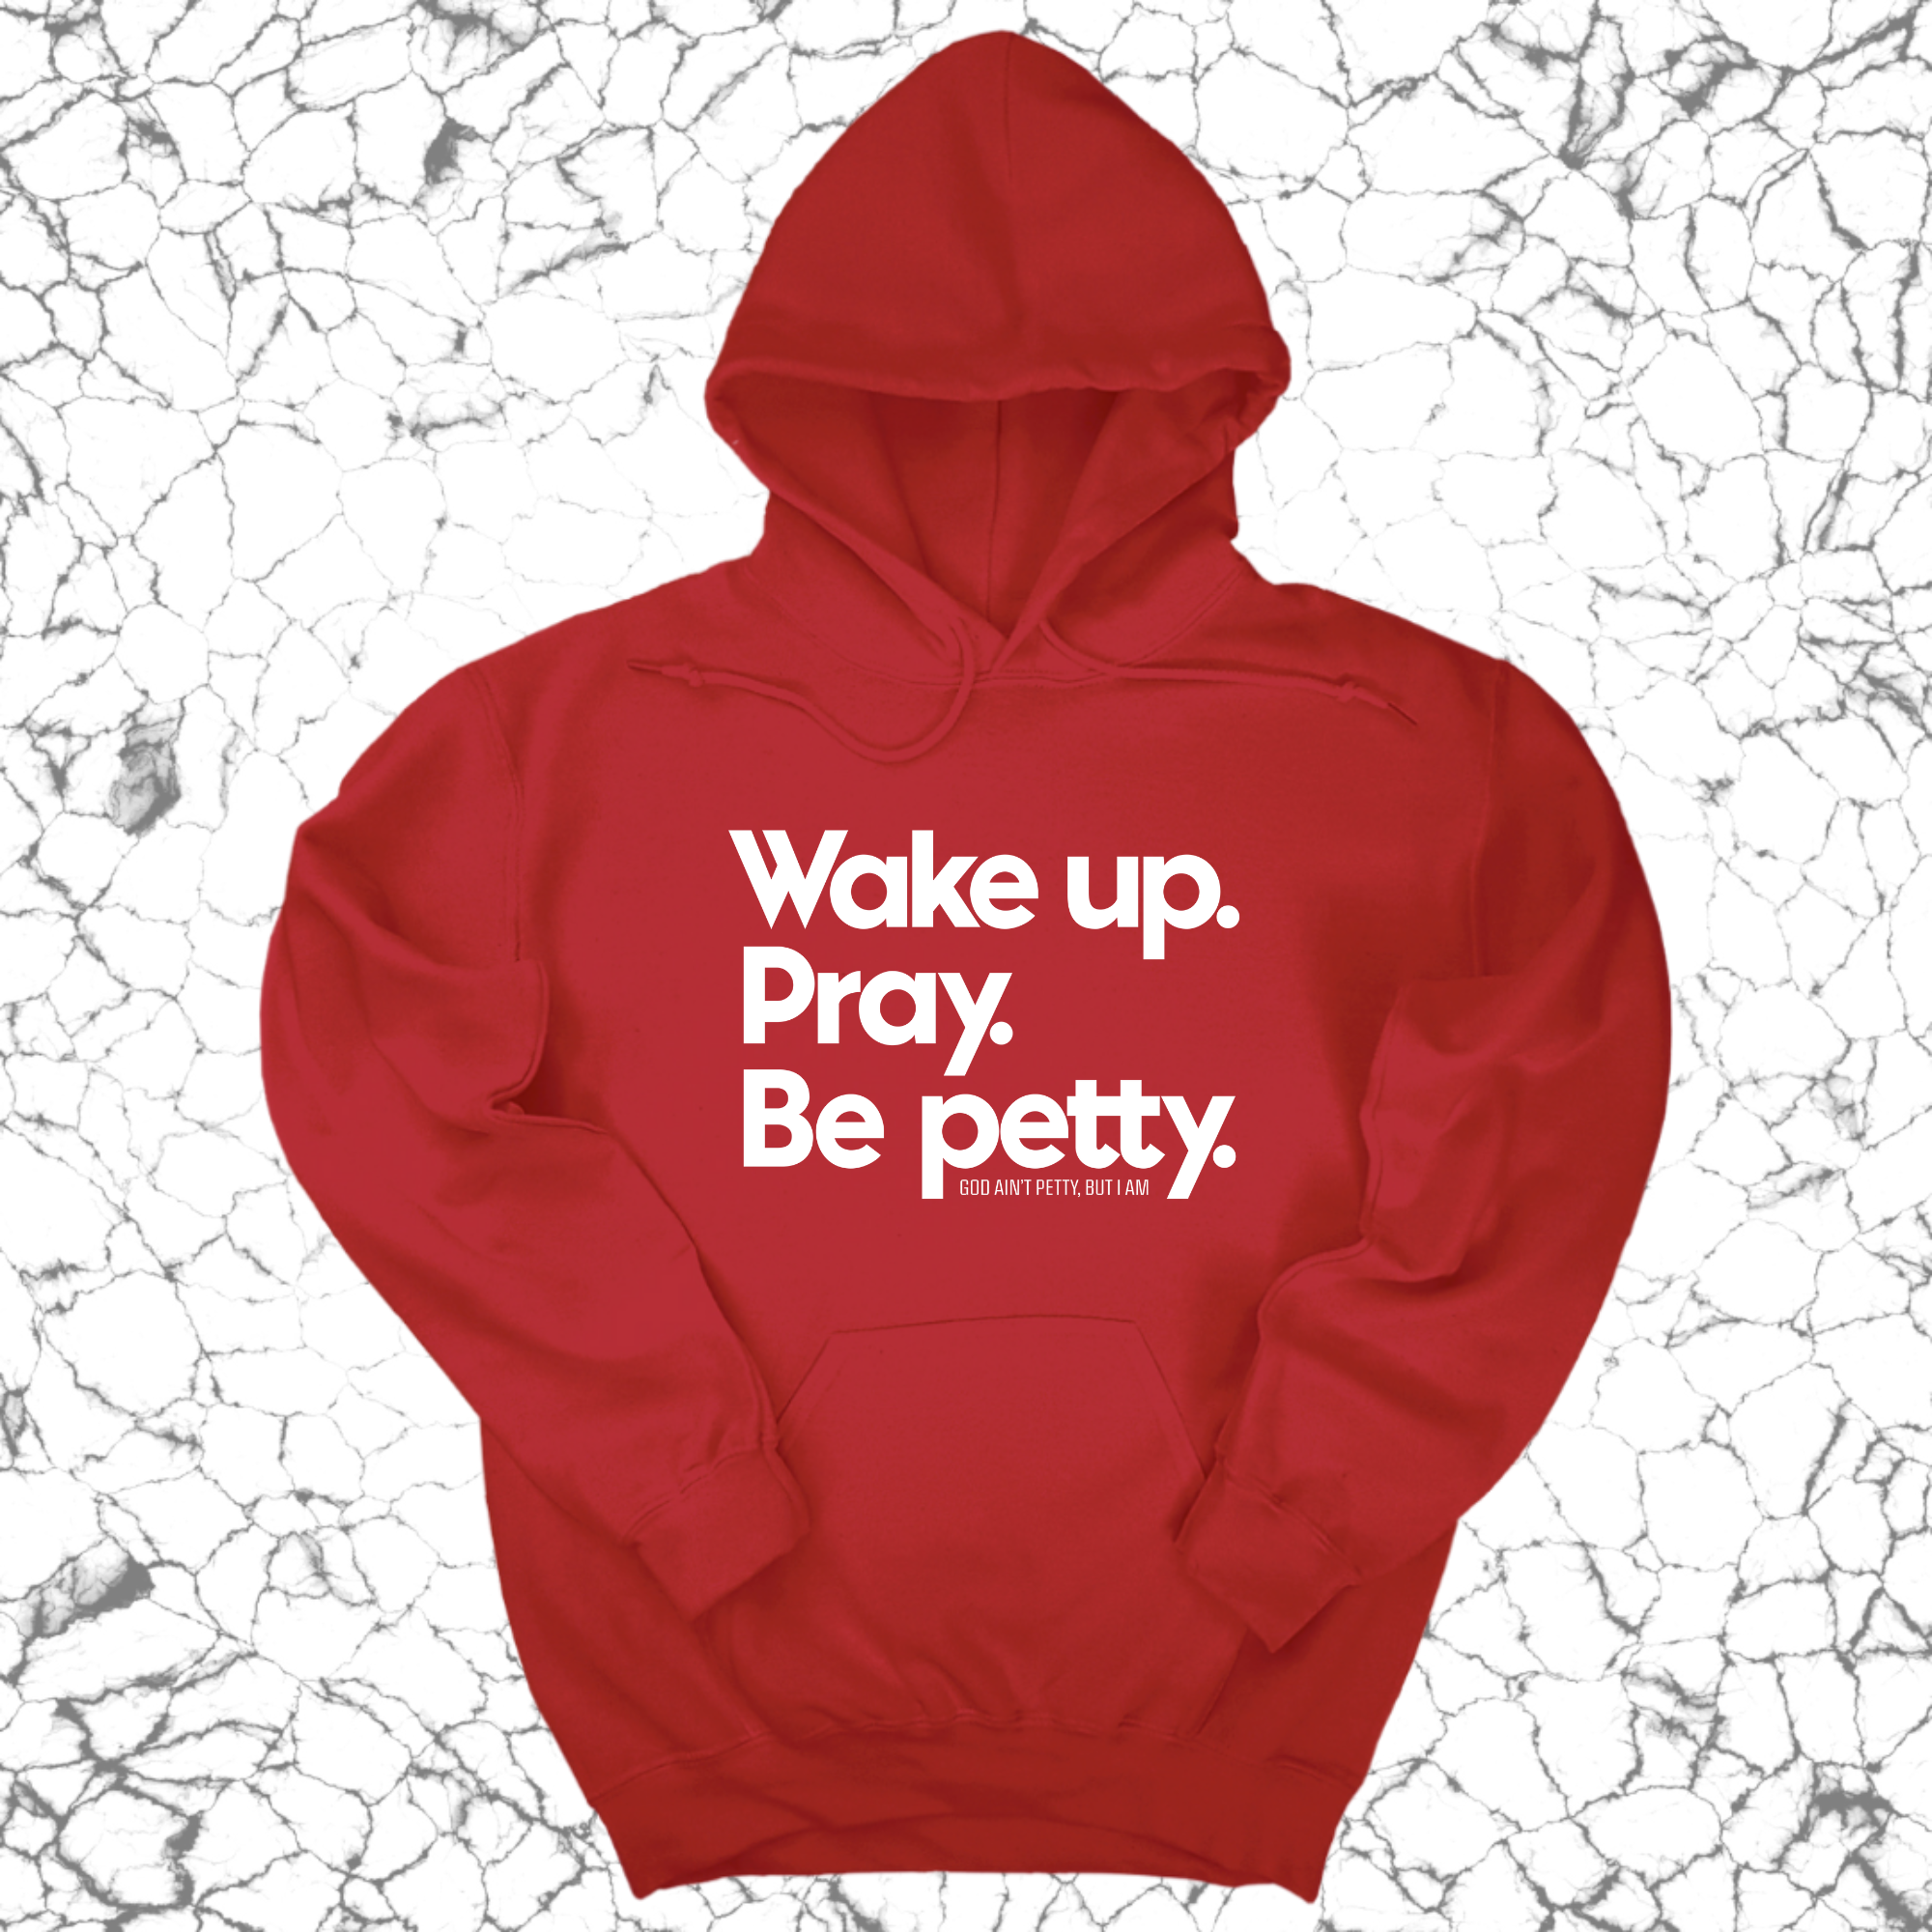 Wake up. Pray. Be Petty Unisex Hoodie-Hoodie-The Original God Ain't Petty But I Am